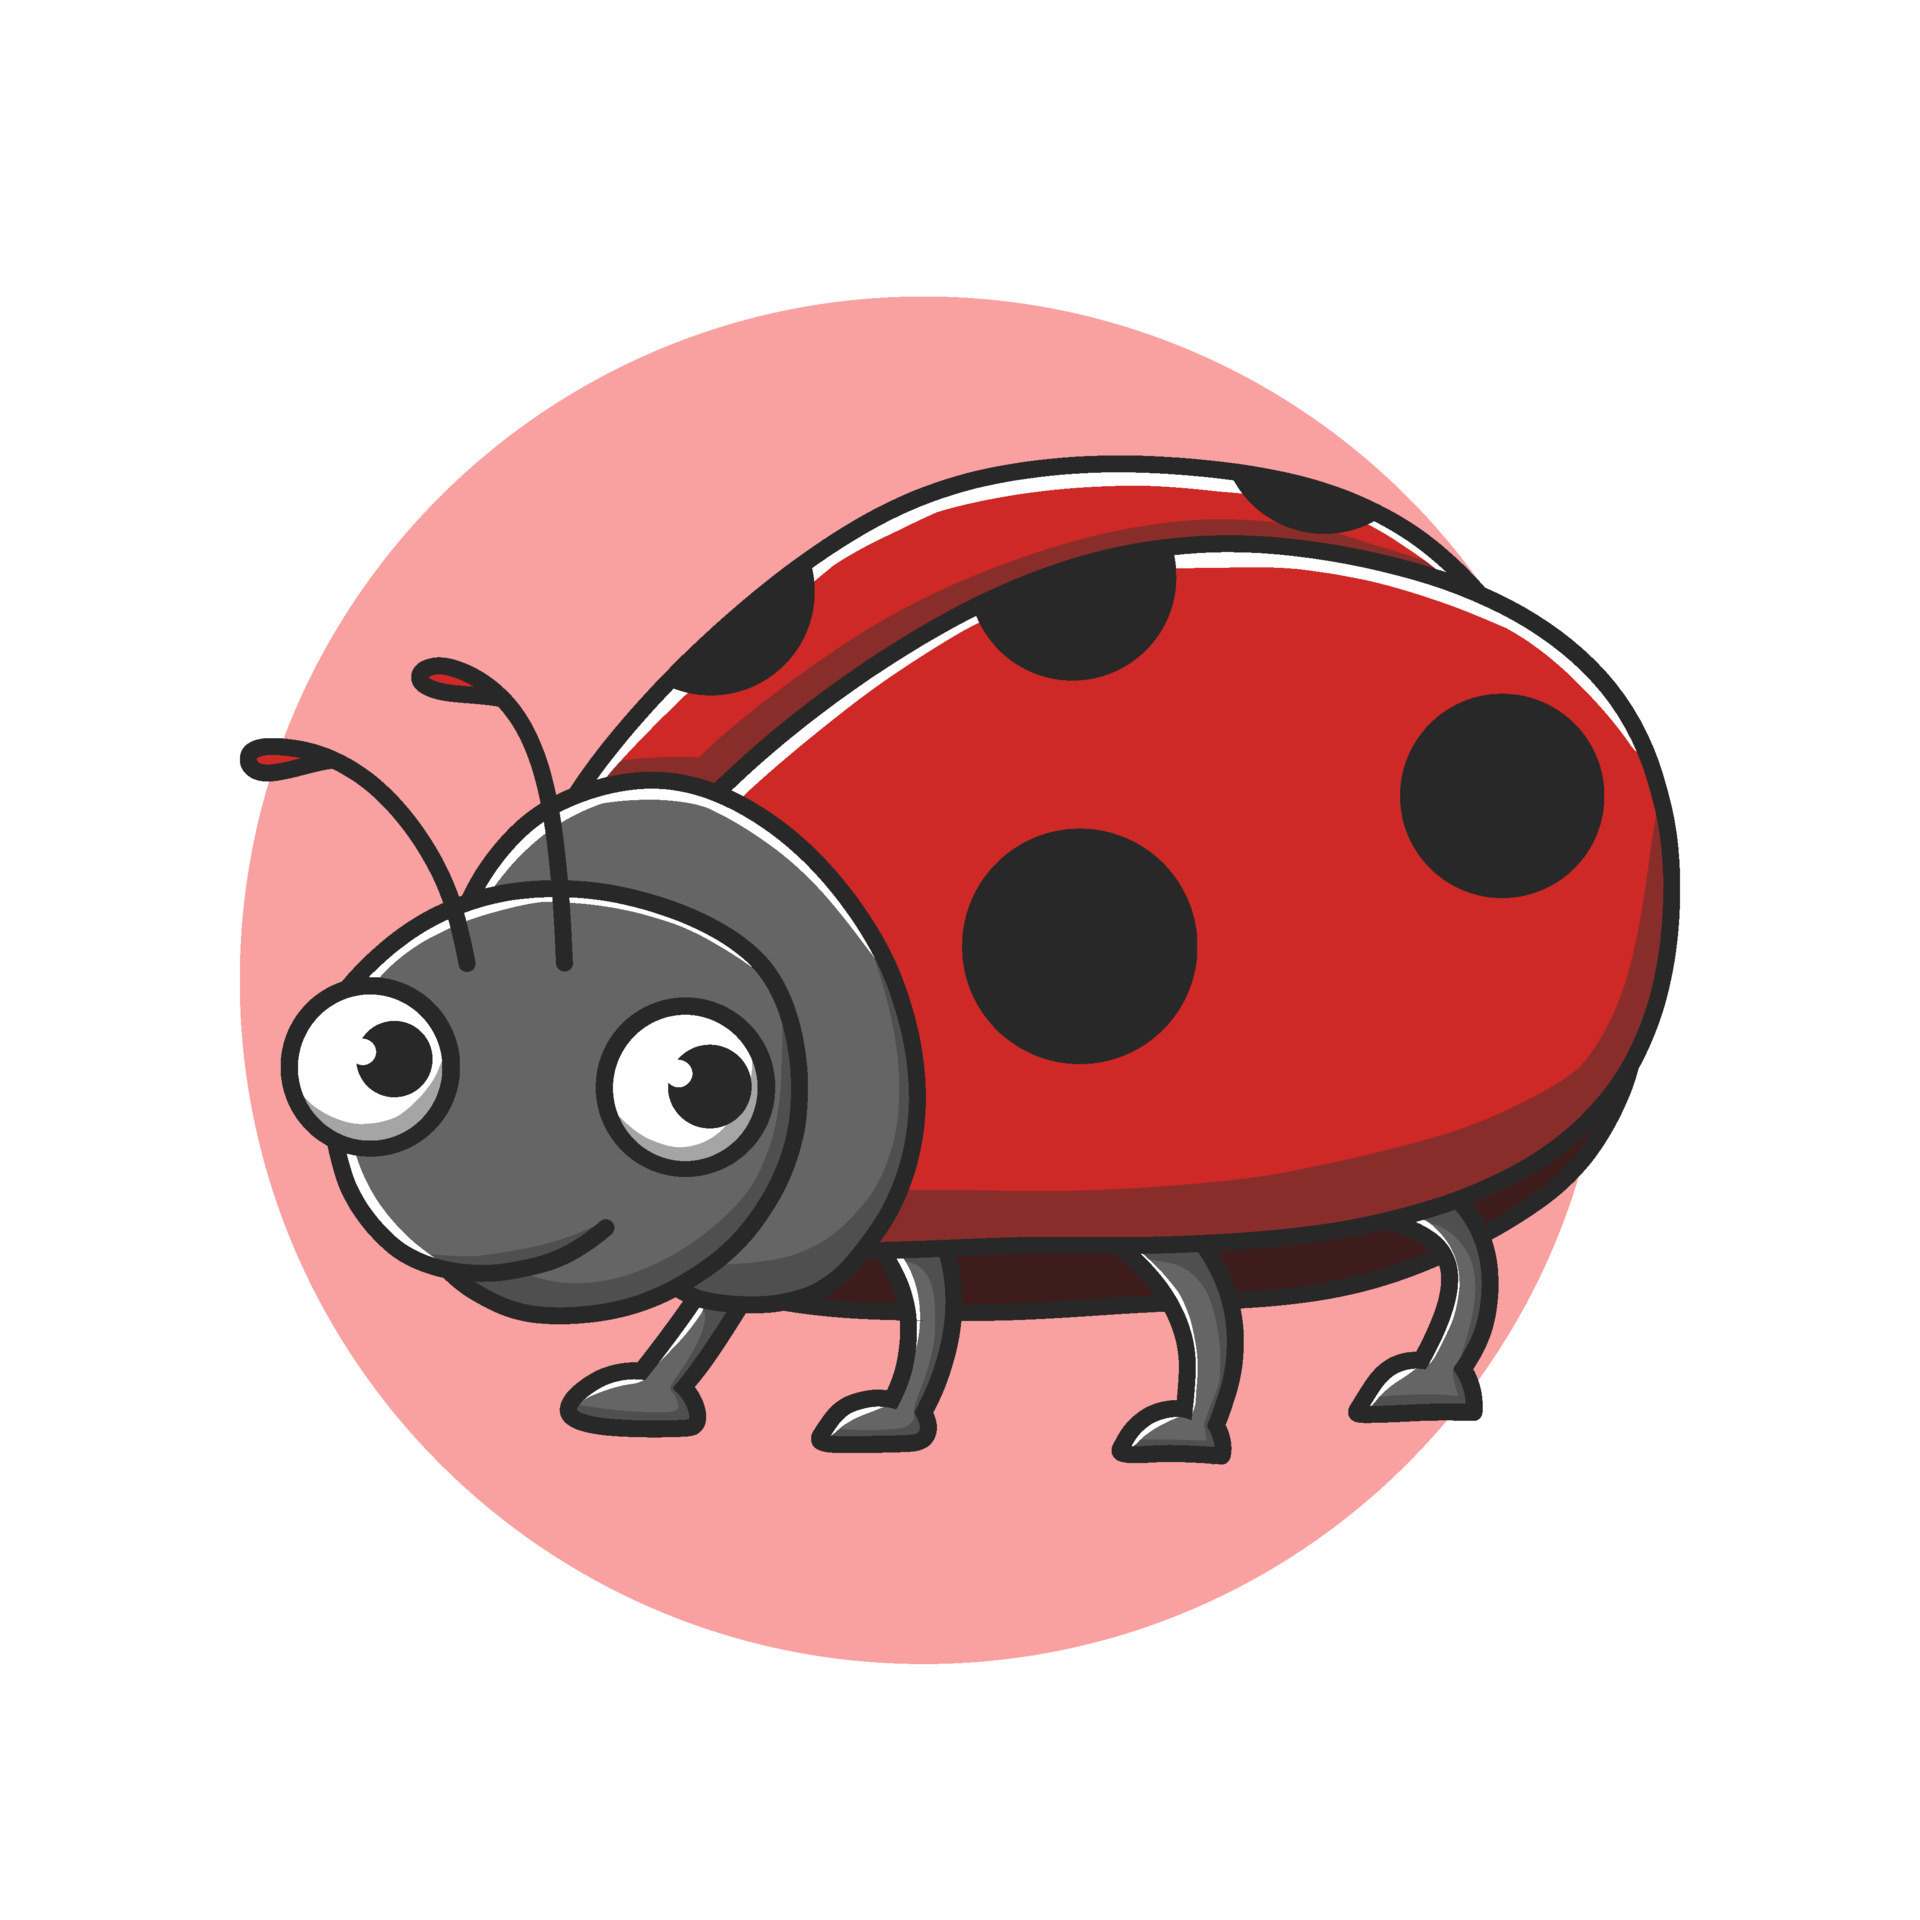 Beetle Icon Kids Drawing Cartoon. Bug Insect Mascot Vector Illustration.  Ladybug Animal Cute Character 9221369 Vector Art at Vecteezy